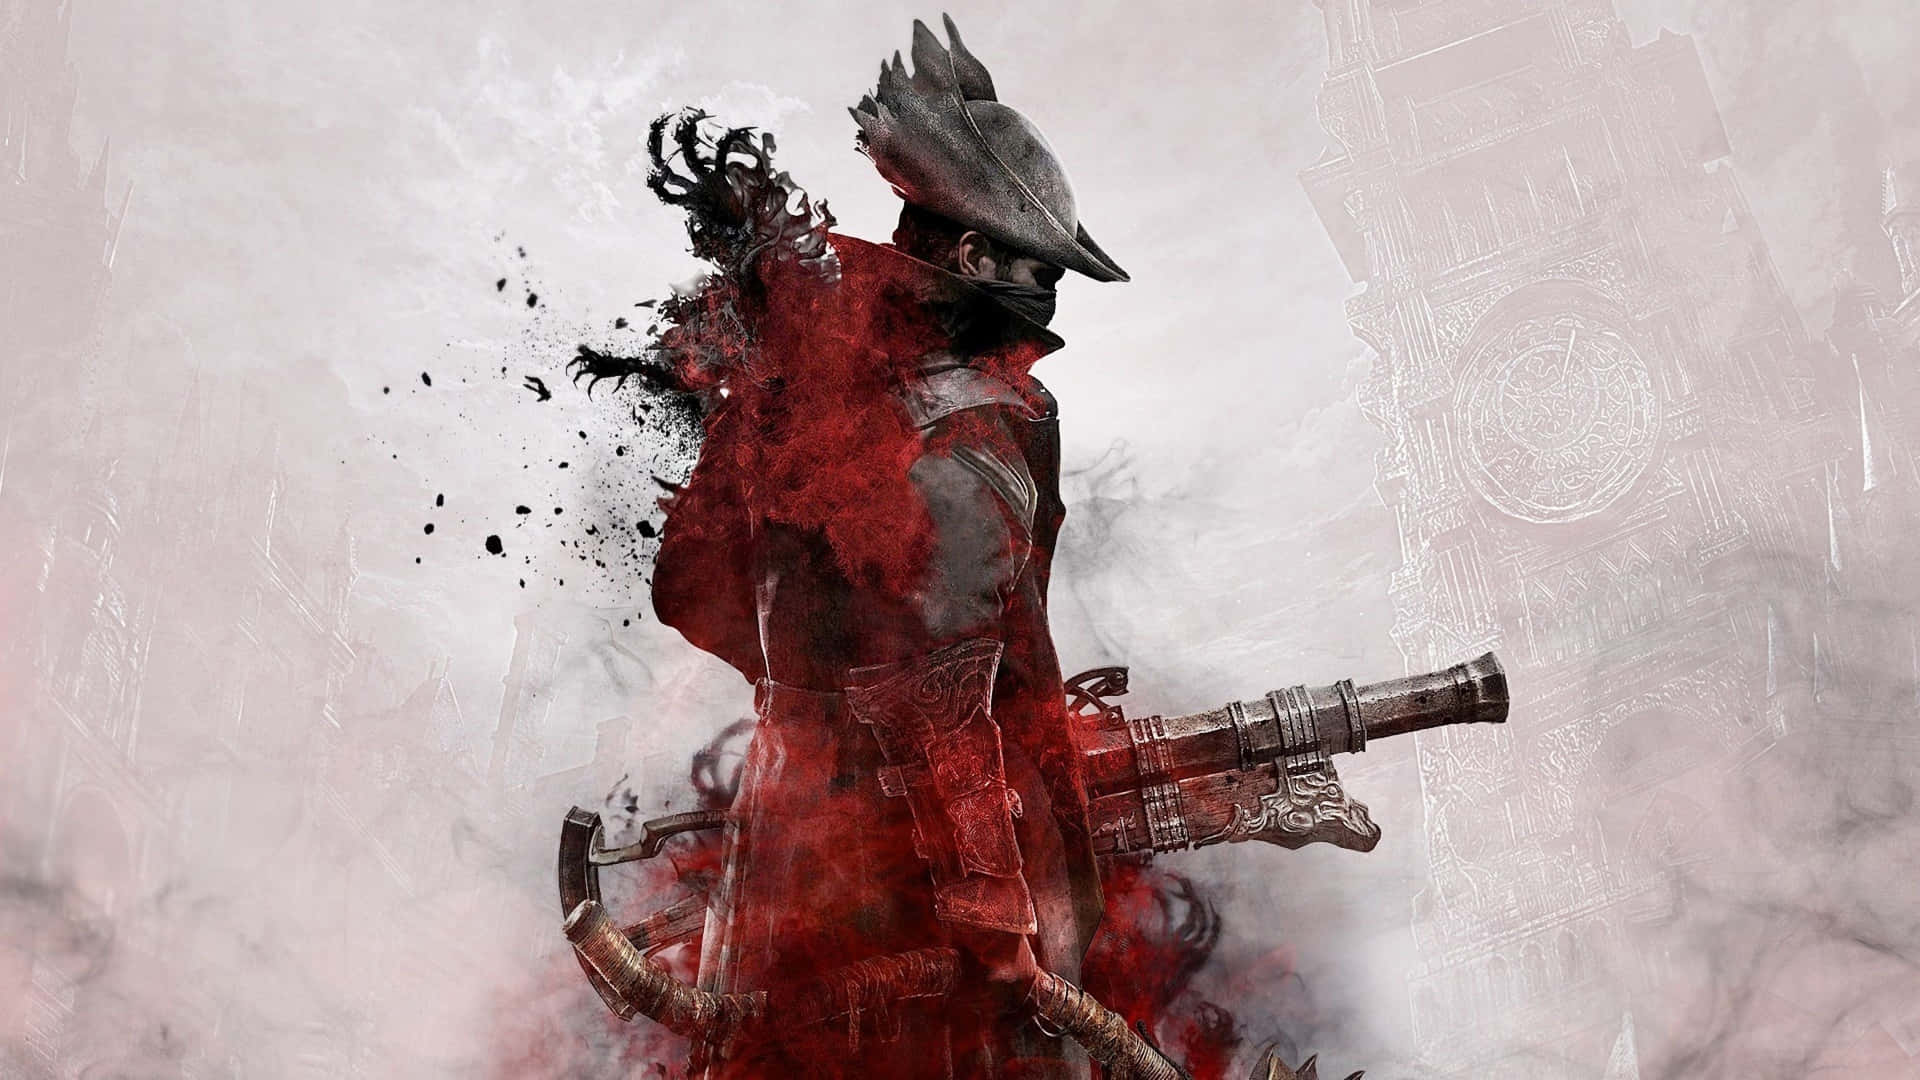 Digital Fanart Of The Hunter Bloodborne 4K HD Wallpaper